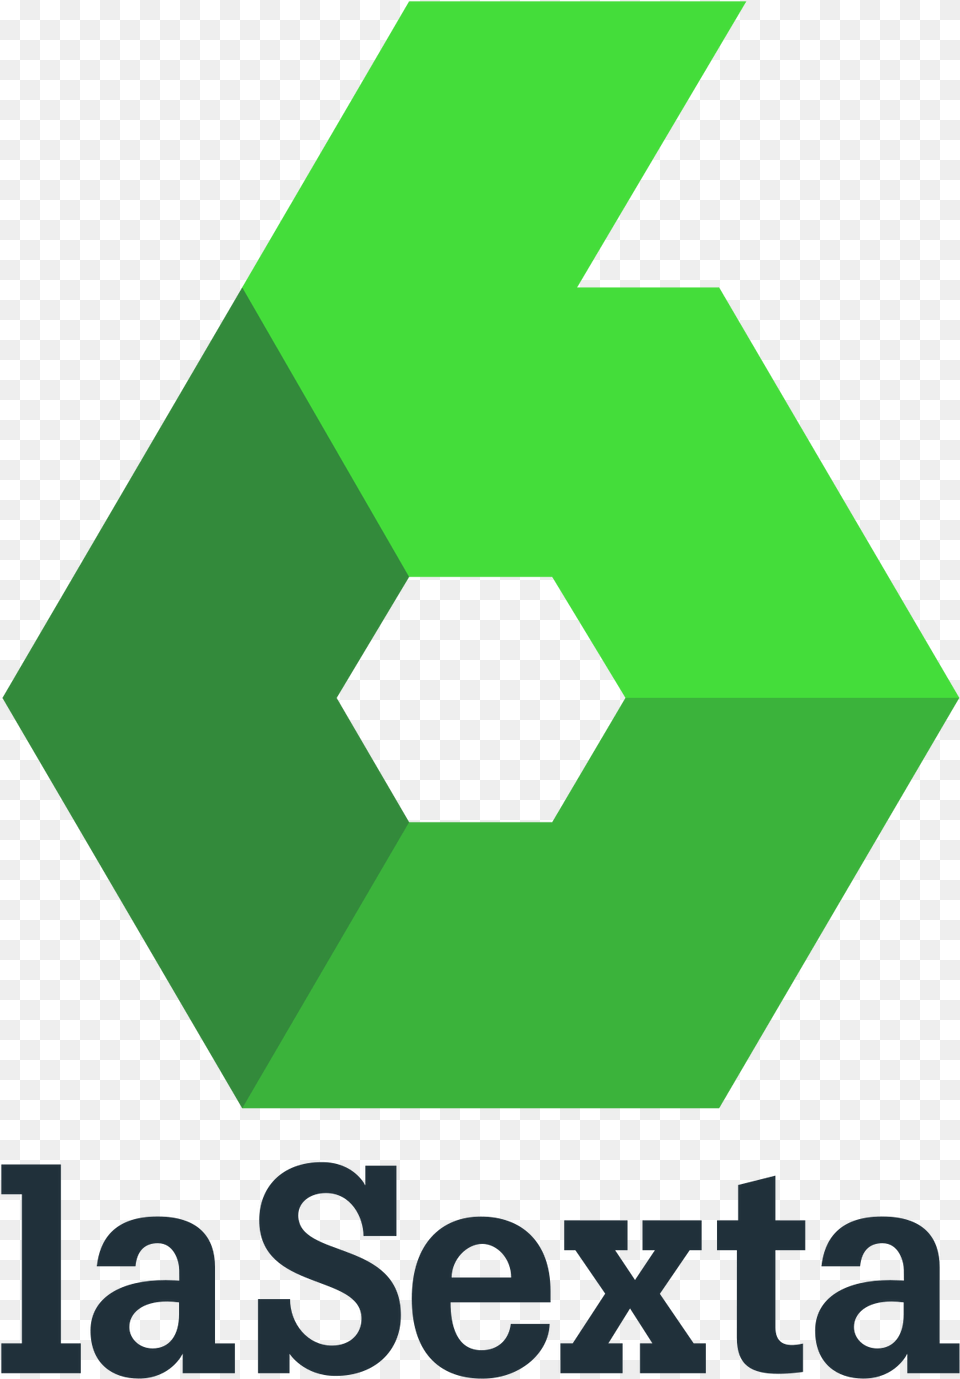 Lasexta Wikipedia Logo La Sexta, Green, Symbol, Recycling Symbol Png Image